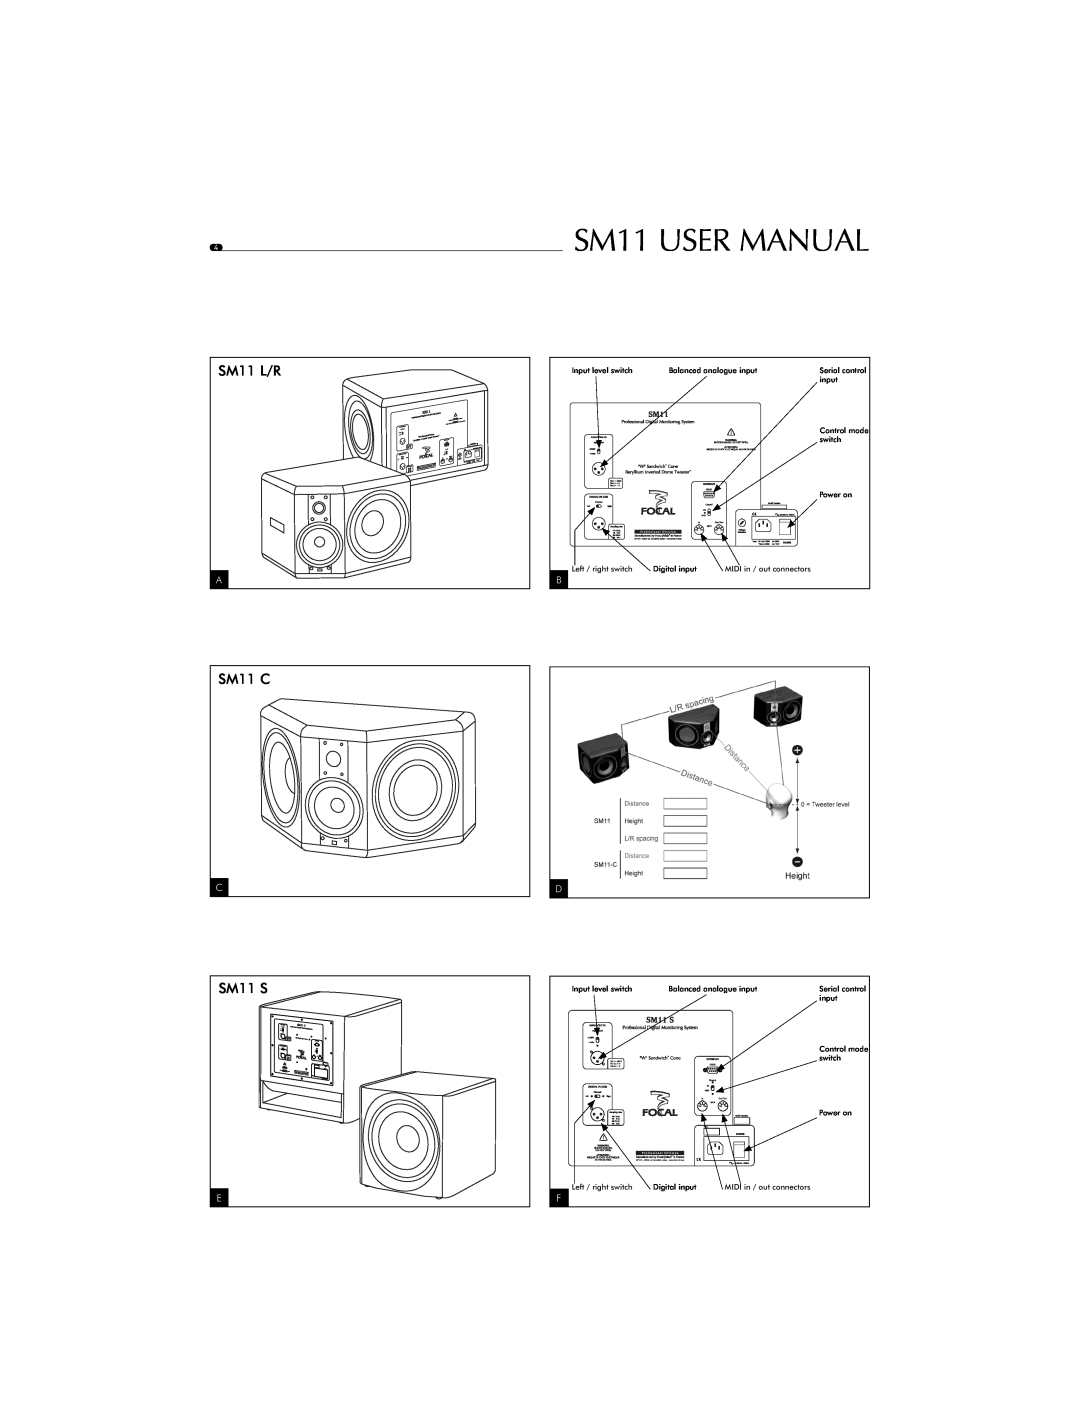 Focal user manual SM11 L/R, SM11 C, SM11 S 